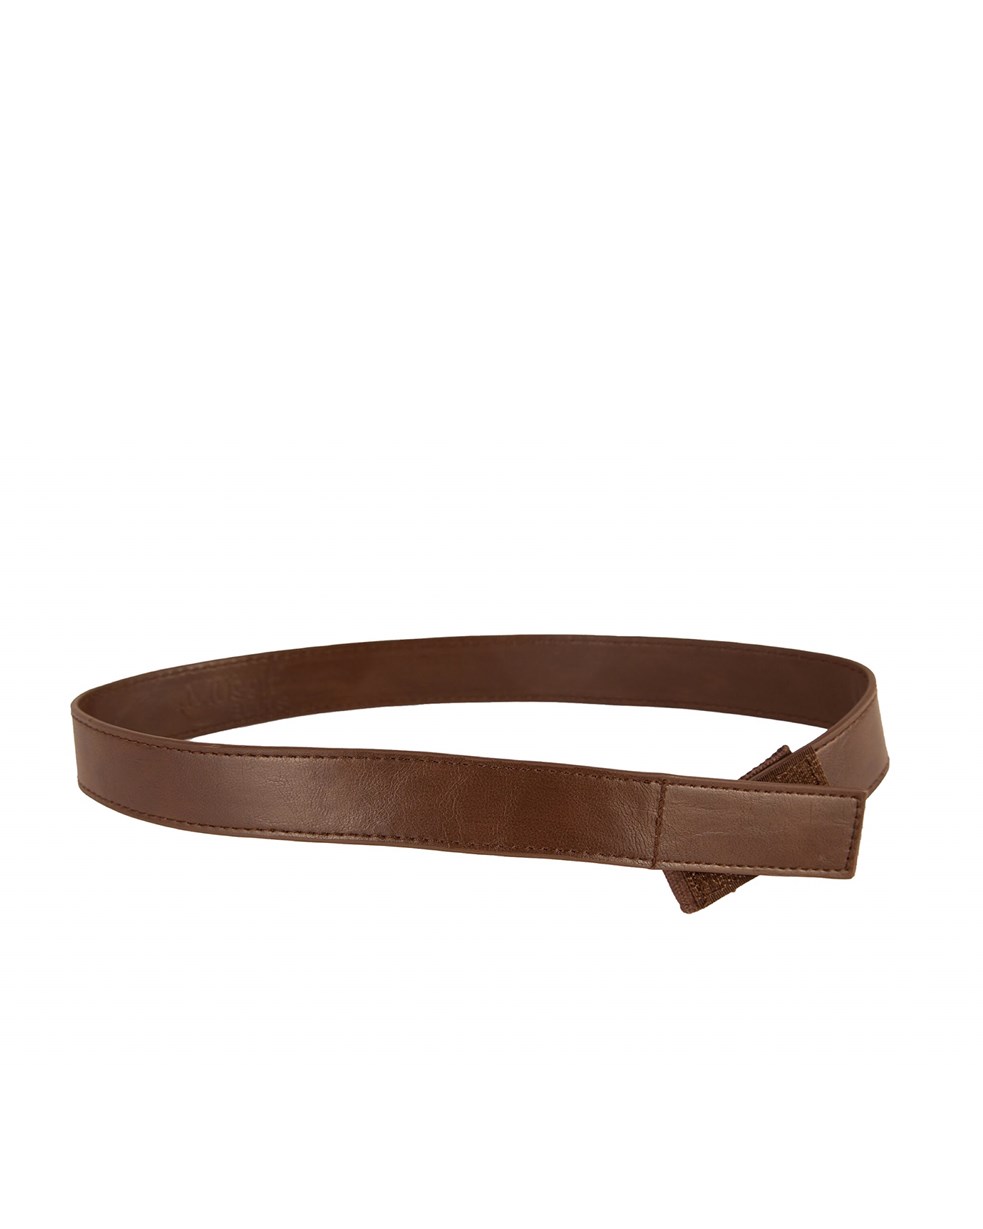 Myself Belts - Leather Belt (Light Brown)